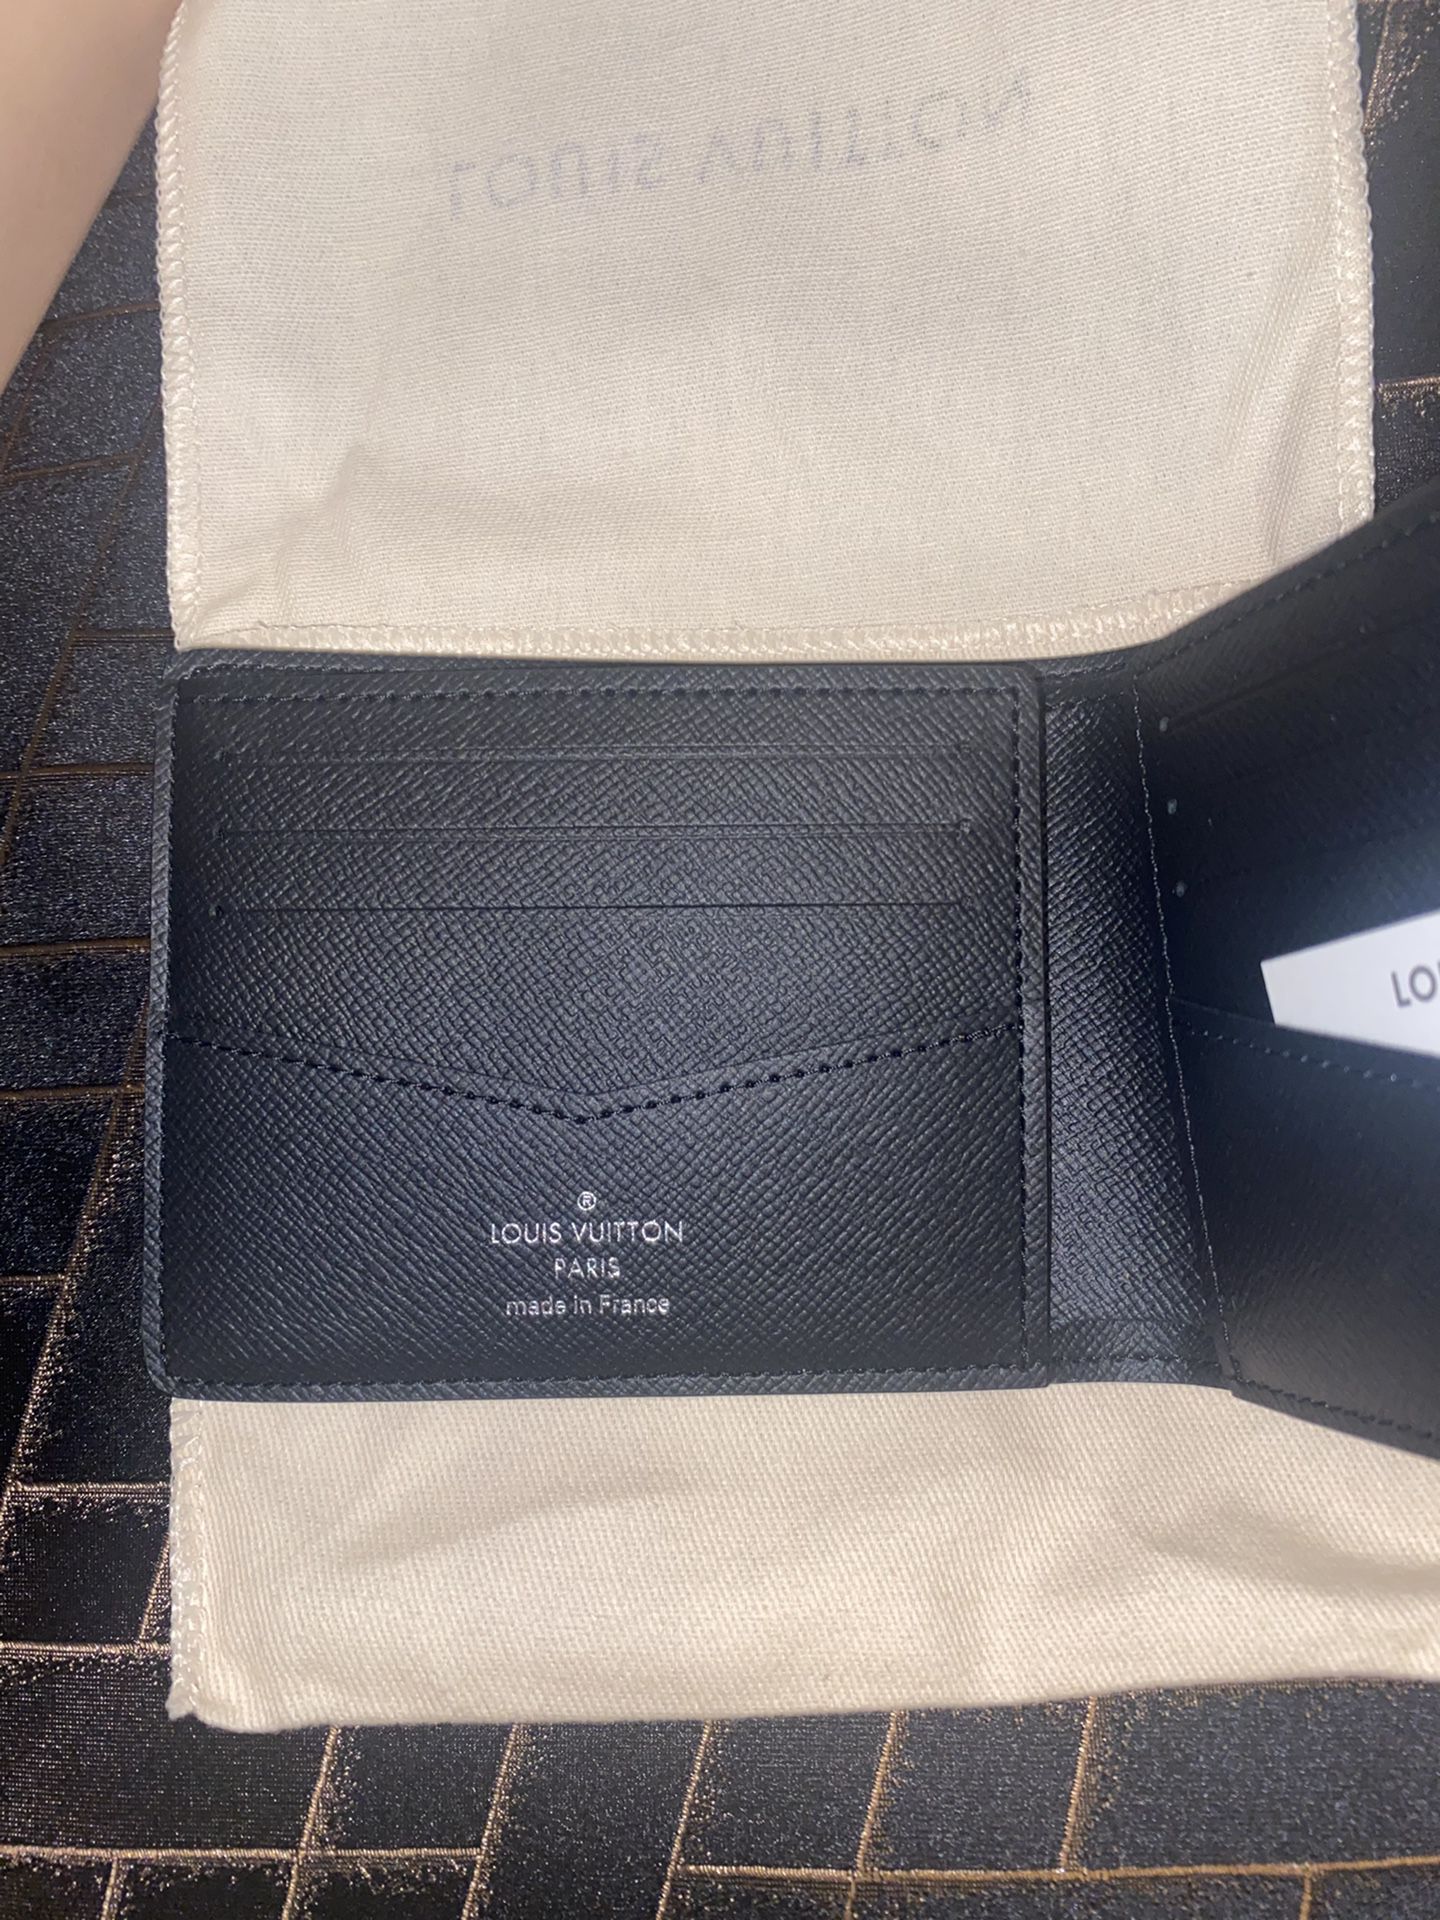 Louis Vuitton Slender Wallet for Sale in Irvine, CA - OfferUp